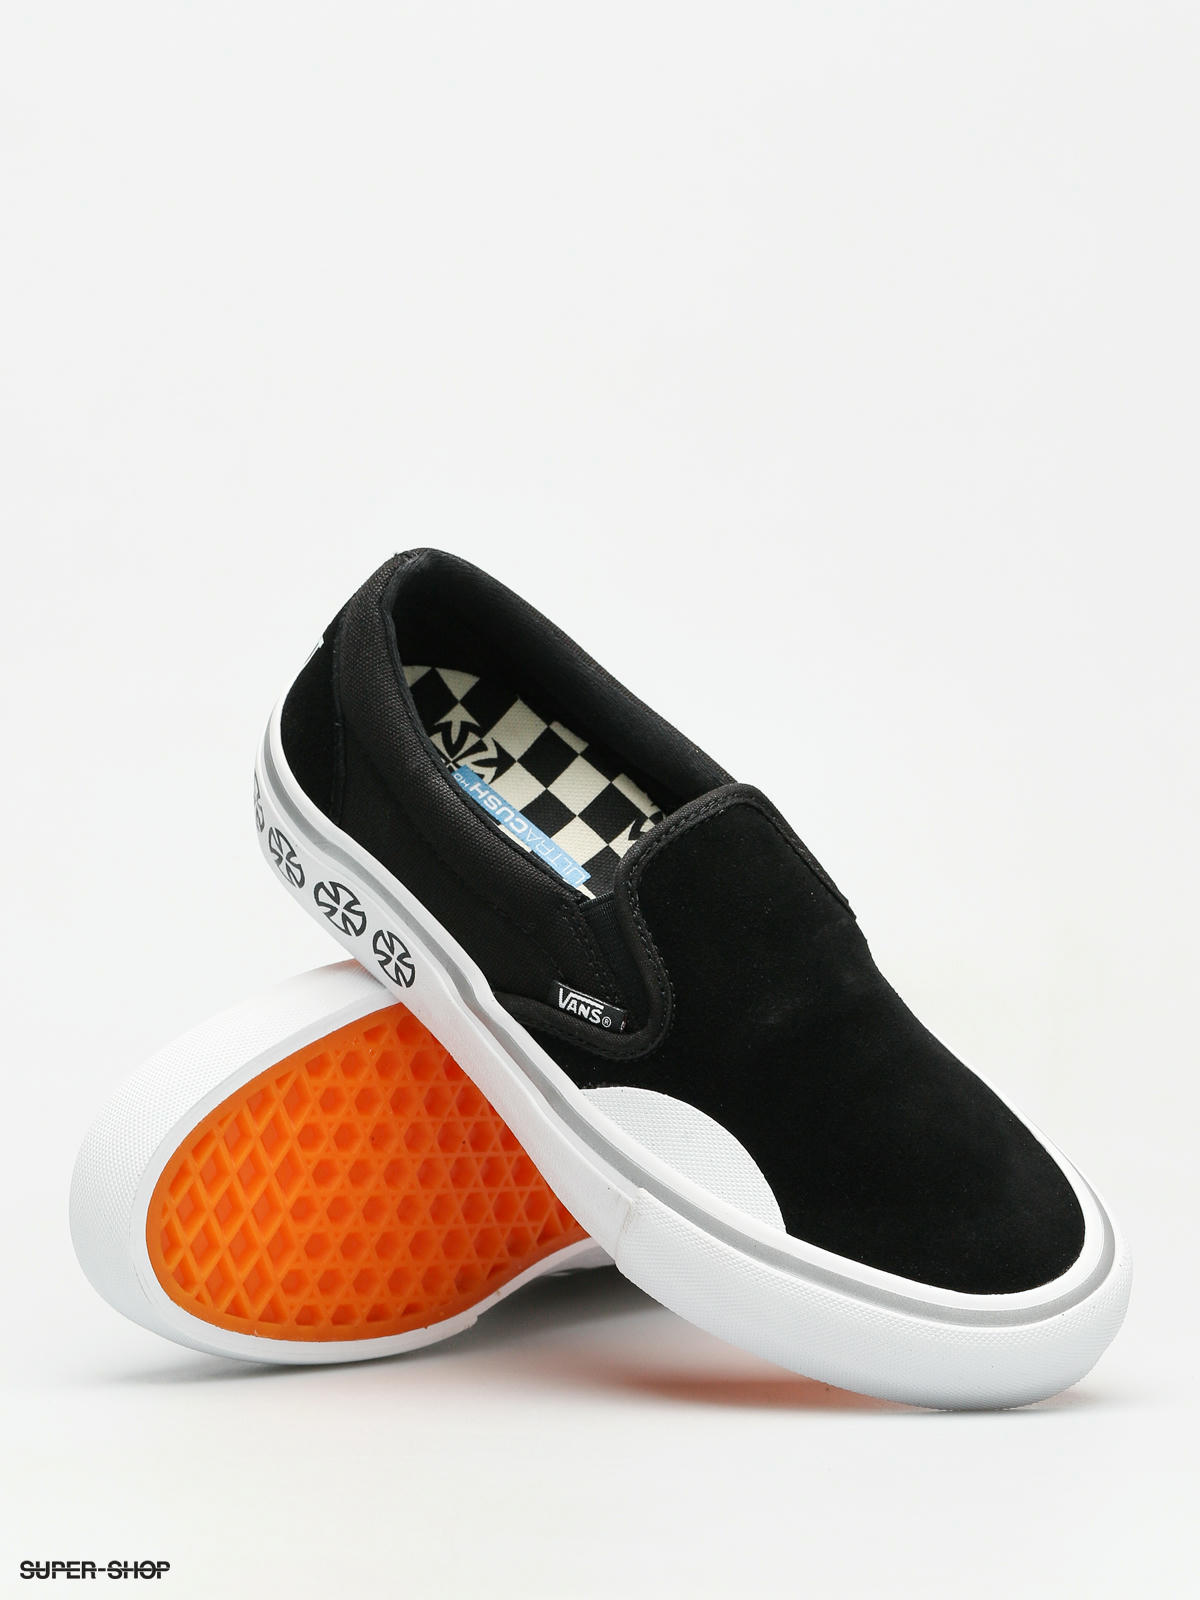 Normalisering Næste shabby Vans x Independent Shoes Slip On Pro (independent black/white)